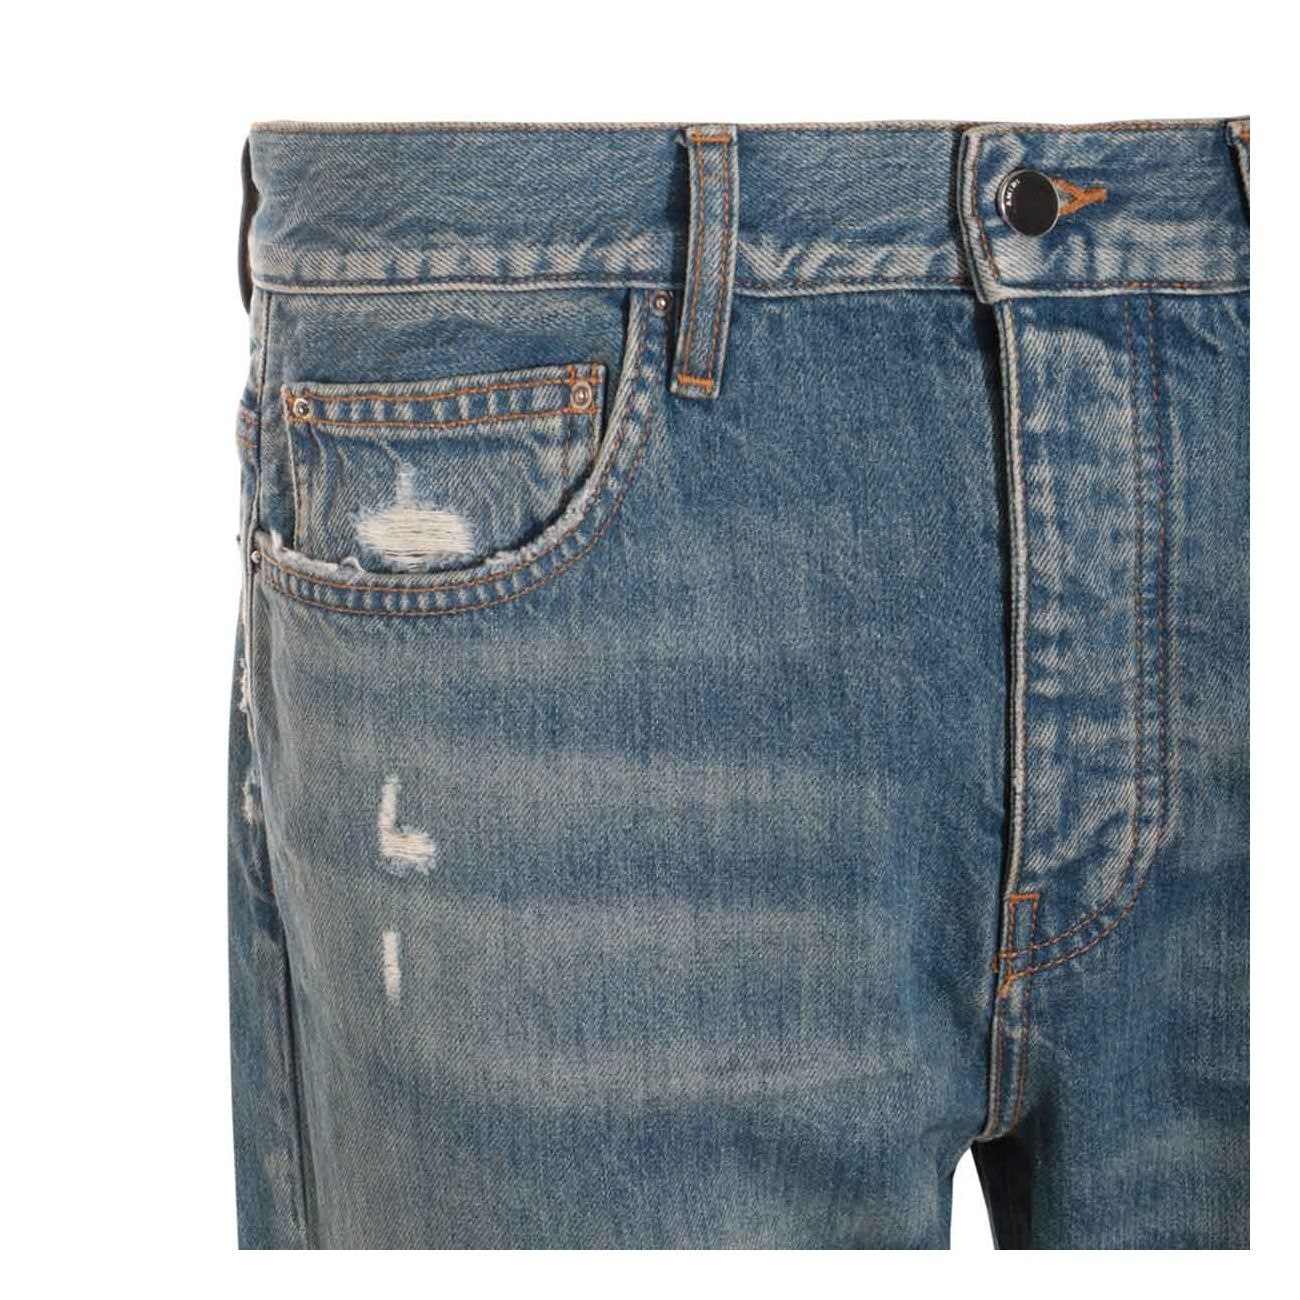 medium blue cotton jeans - 3